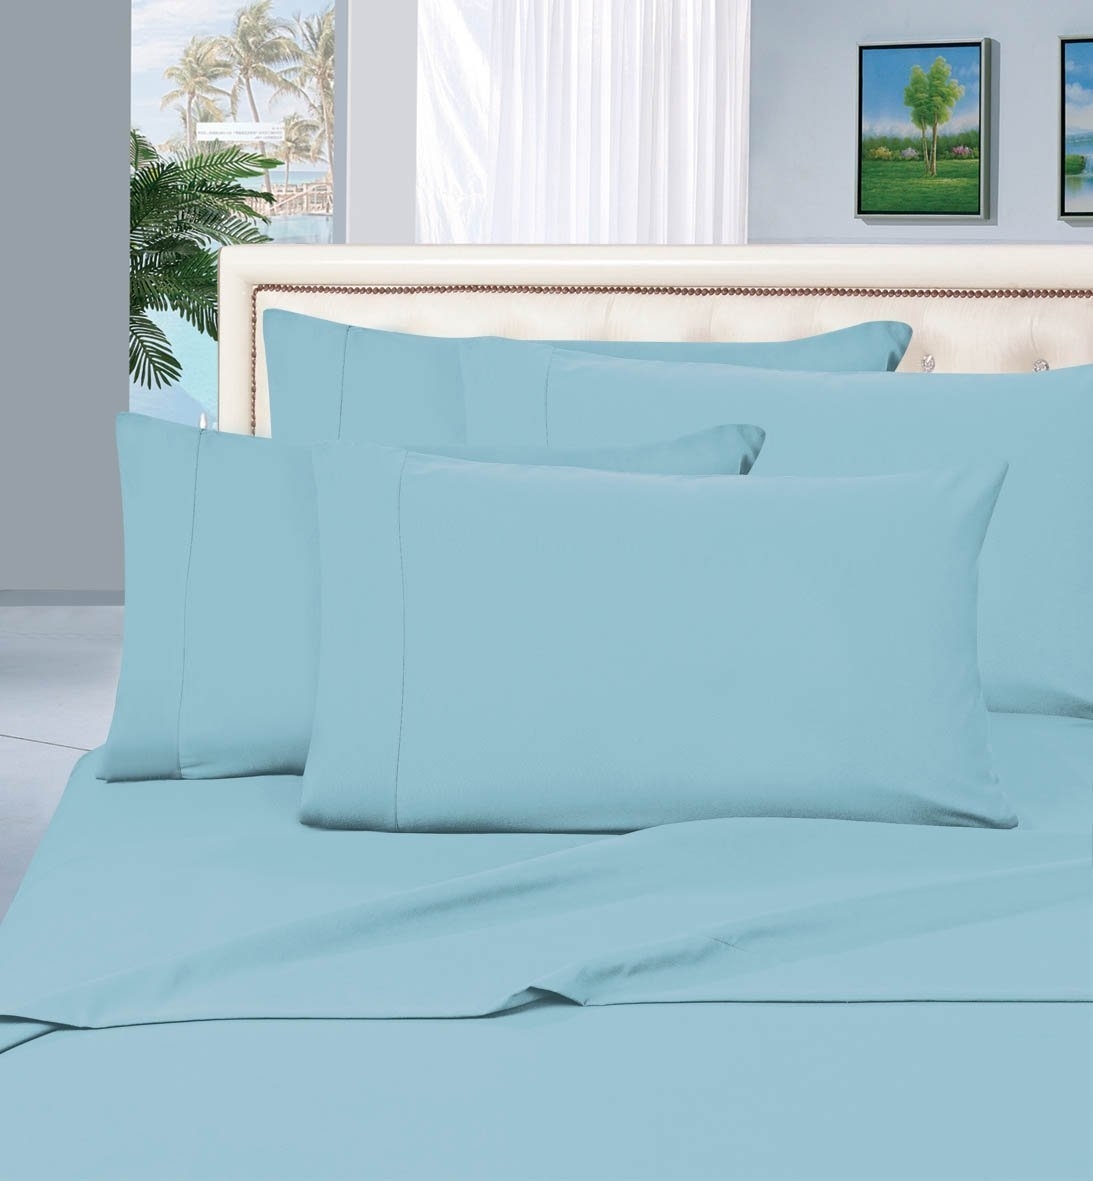 Elegant Comfort 1500 Series Wrinkle Resistant Egyptian Quality Hypoallergenic Ultra Soft Luxury 4-piece Bed Sheet Set, Queen, Aqua